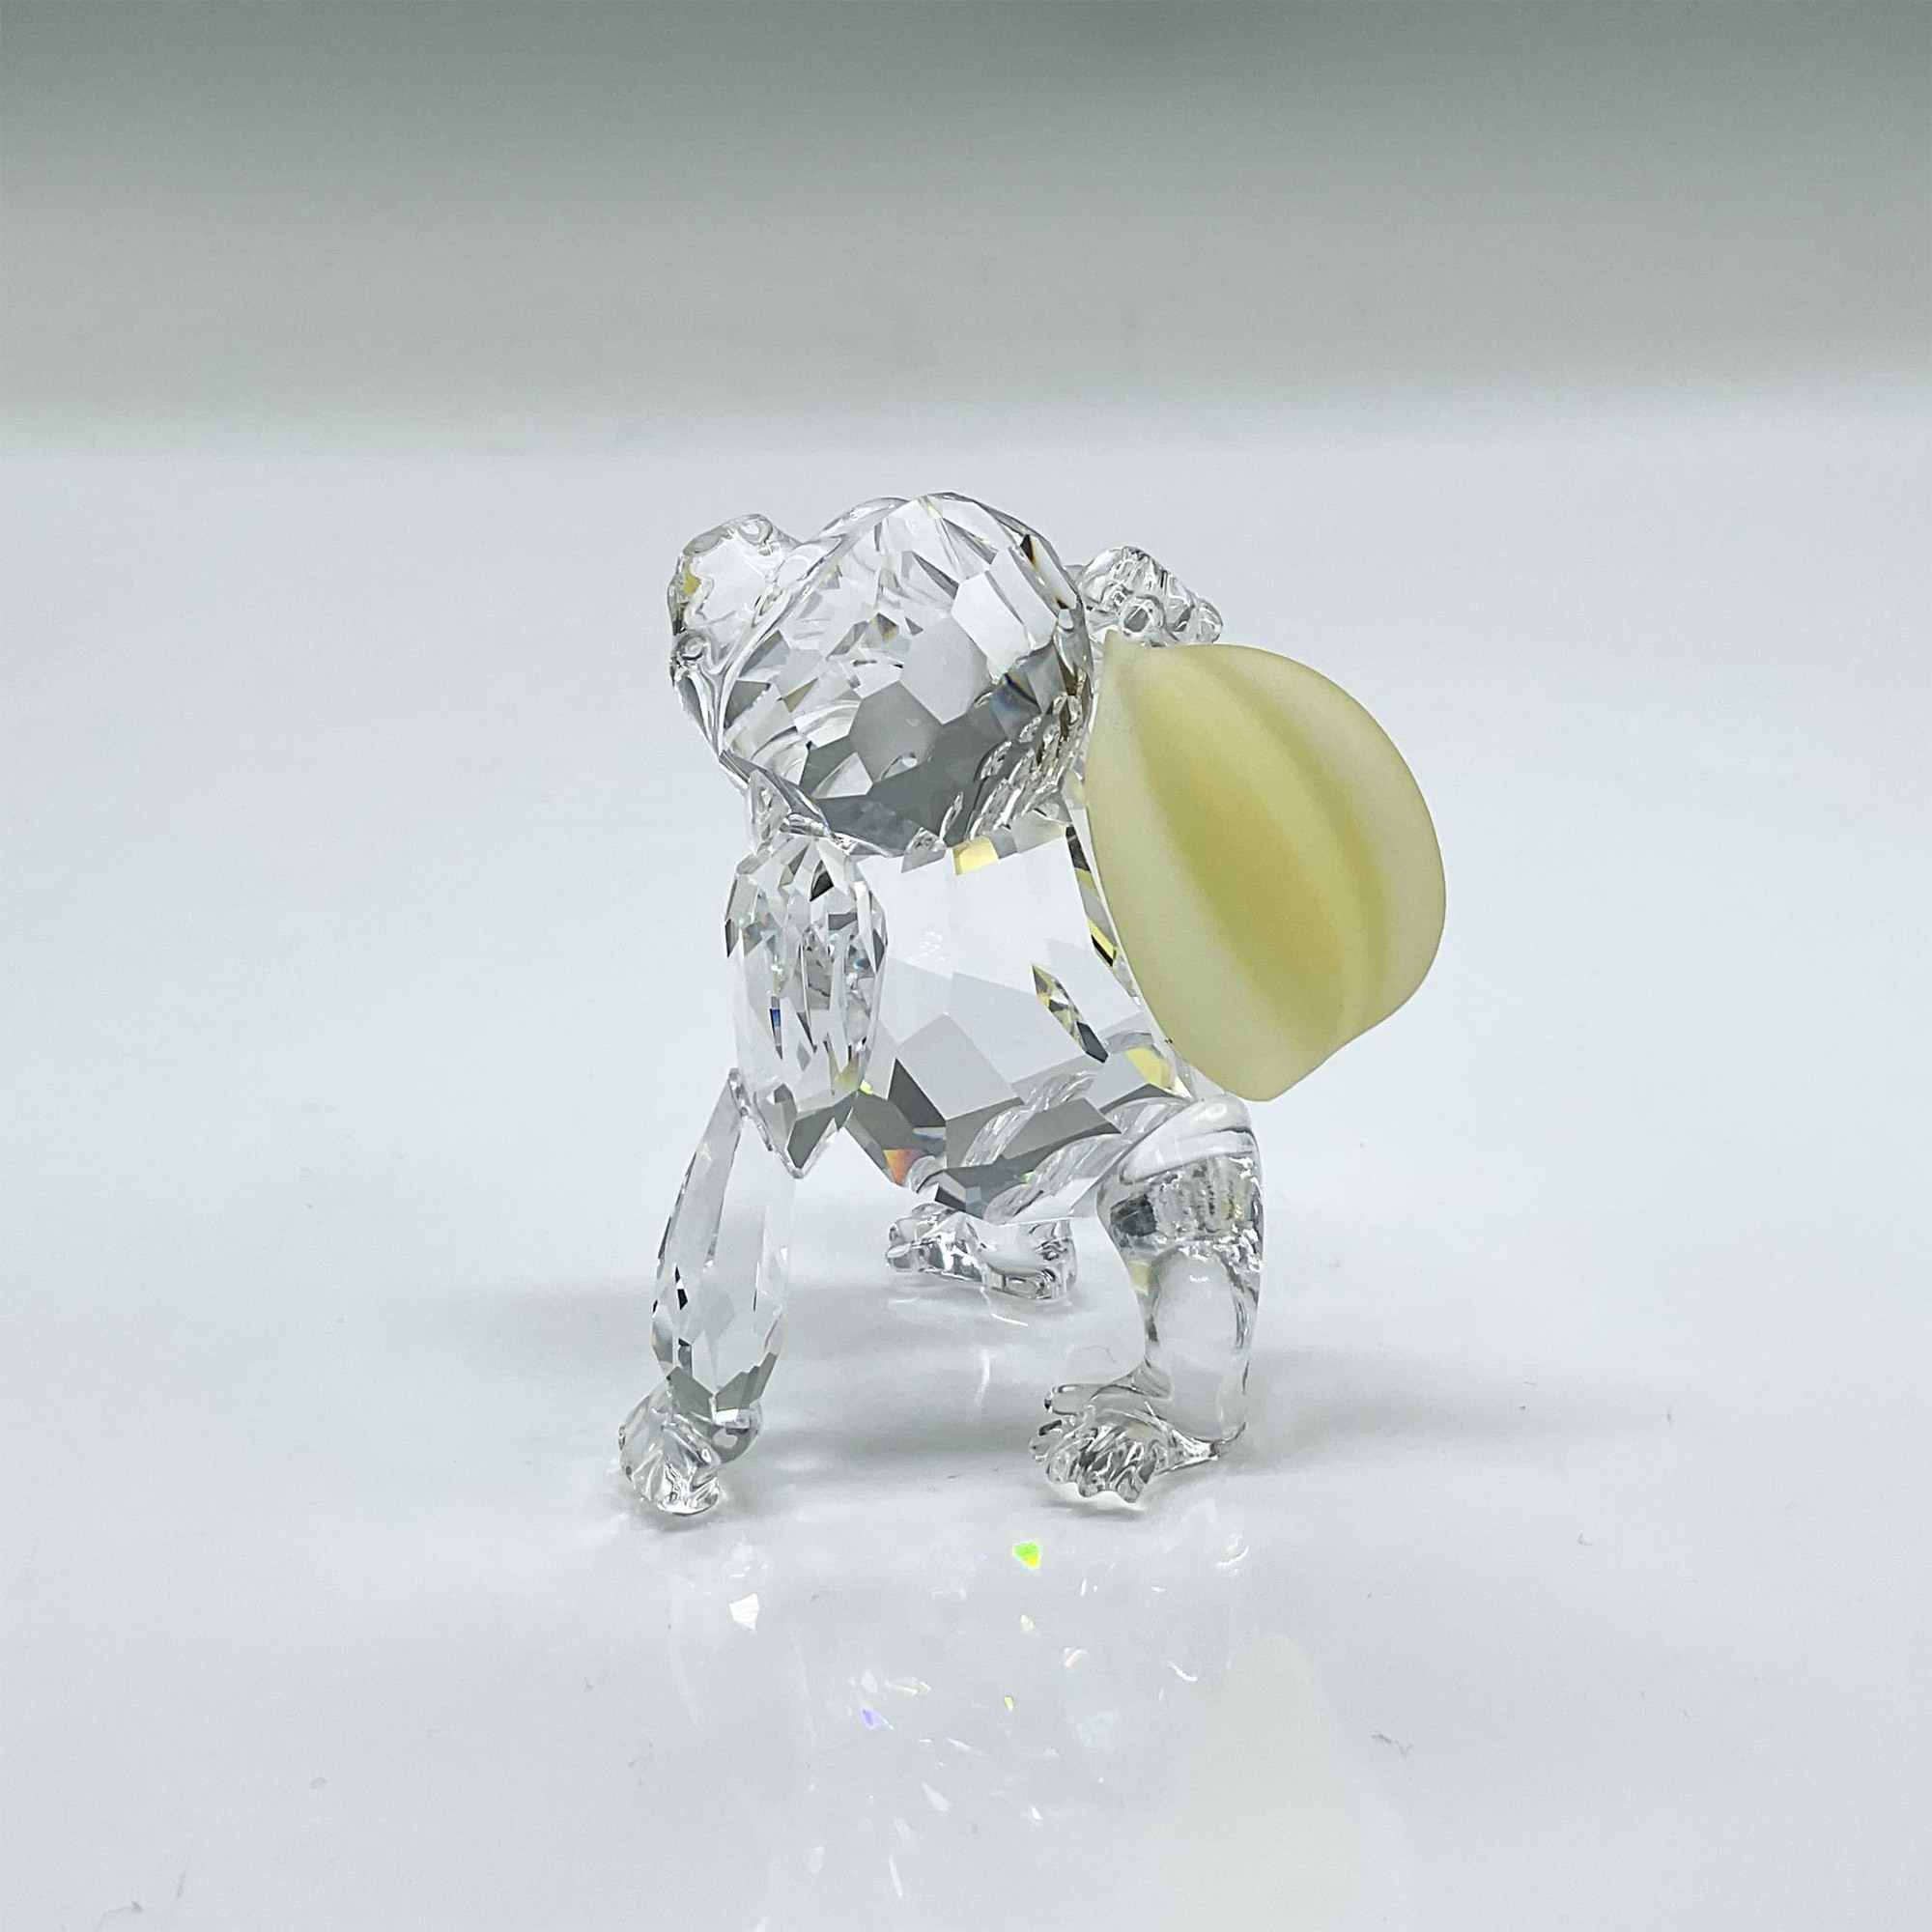 Swarovski Crystal Figurine, Young Gorilla - Image 2 of 4